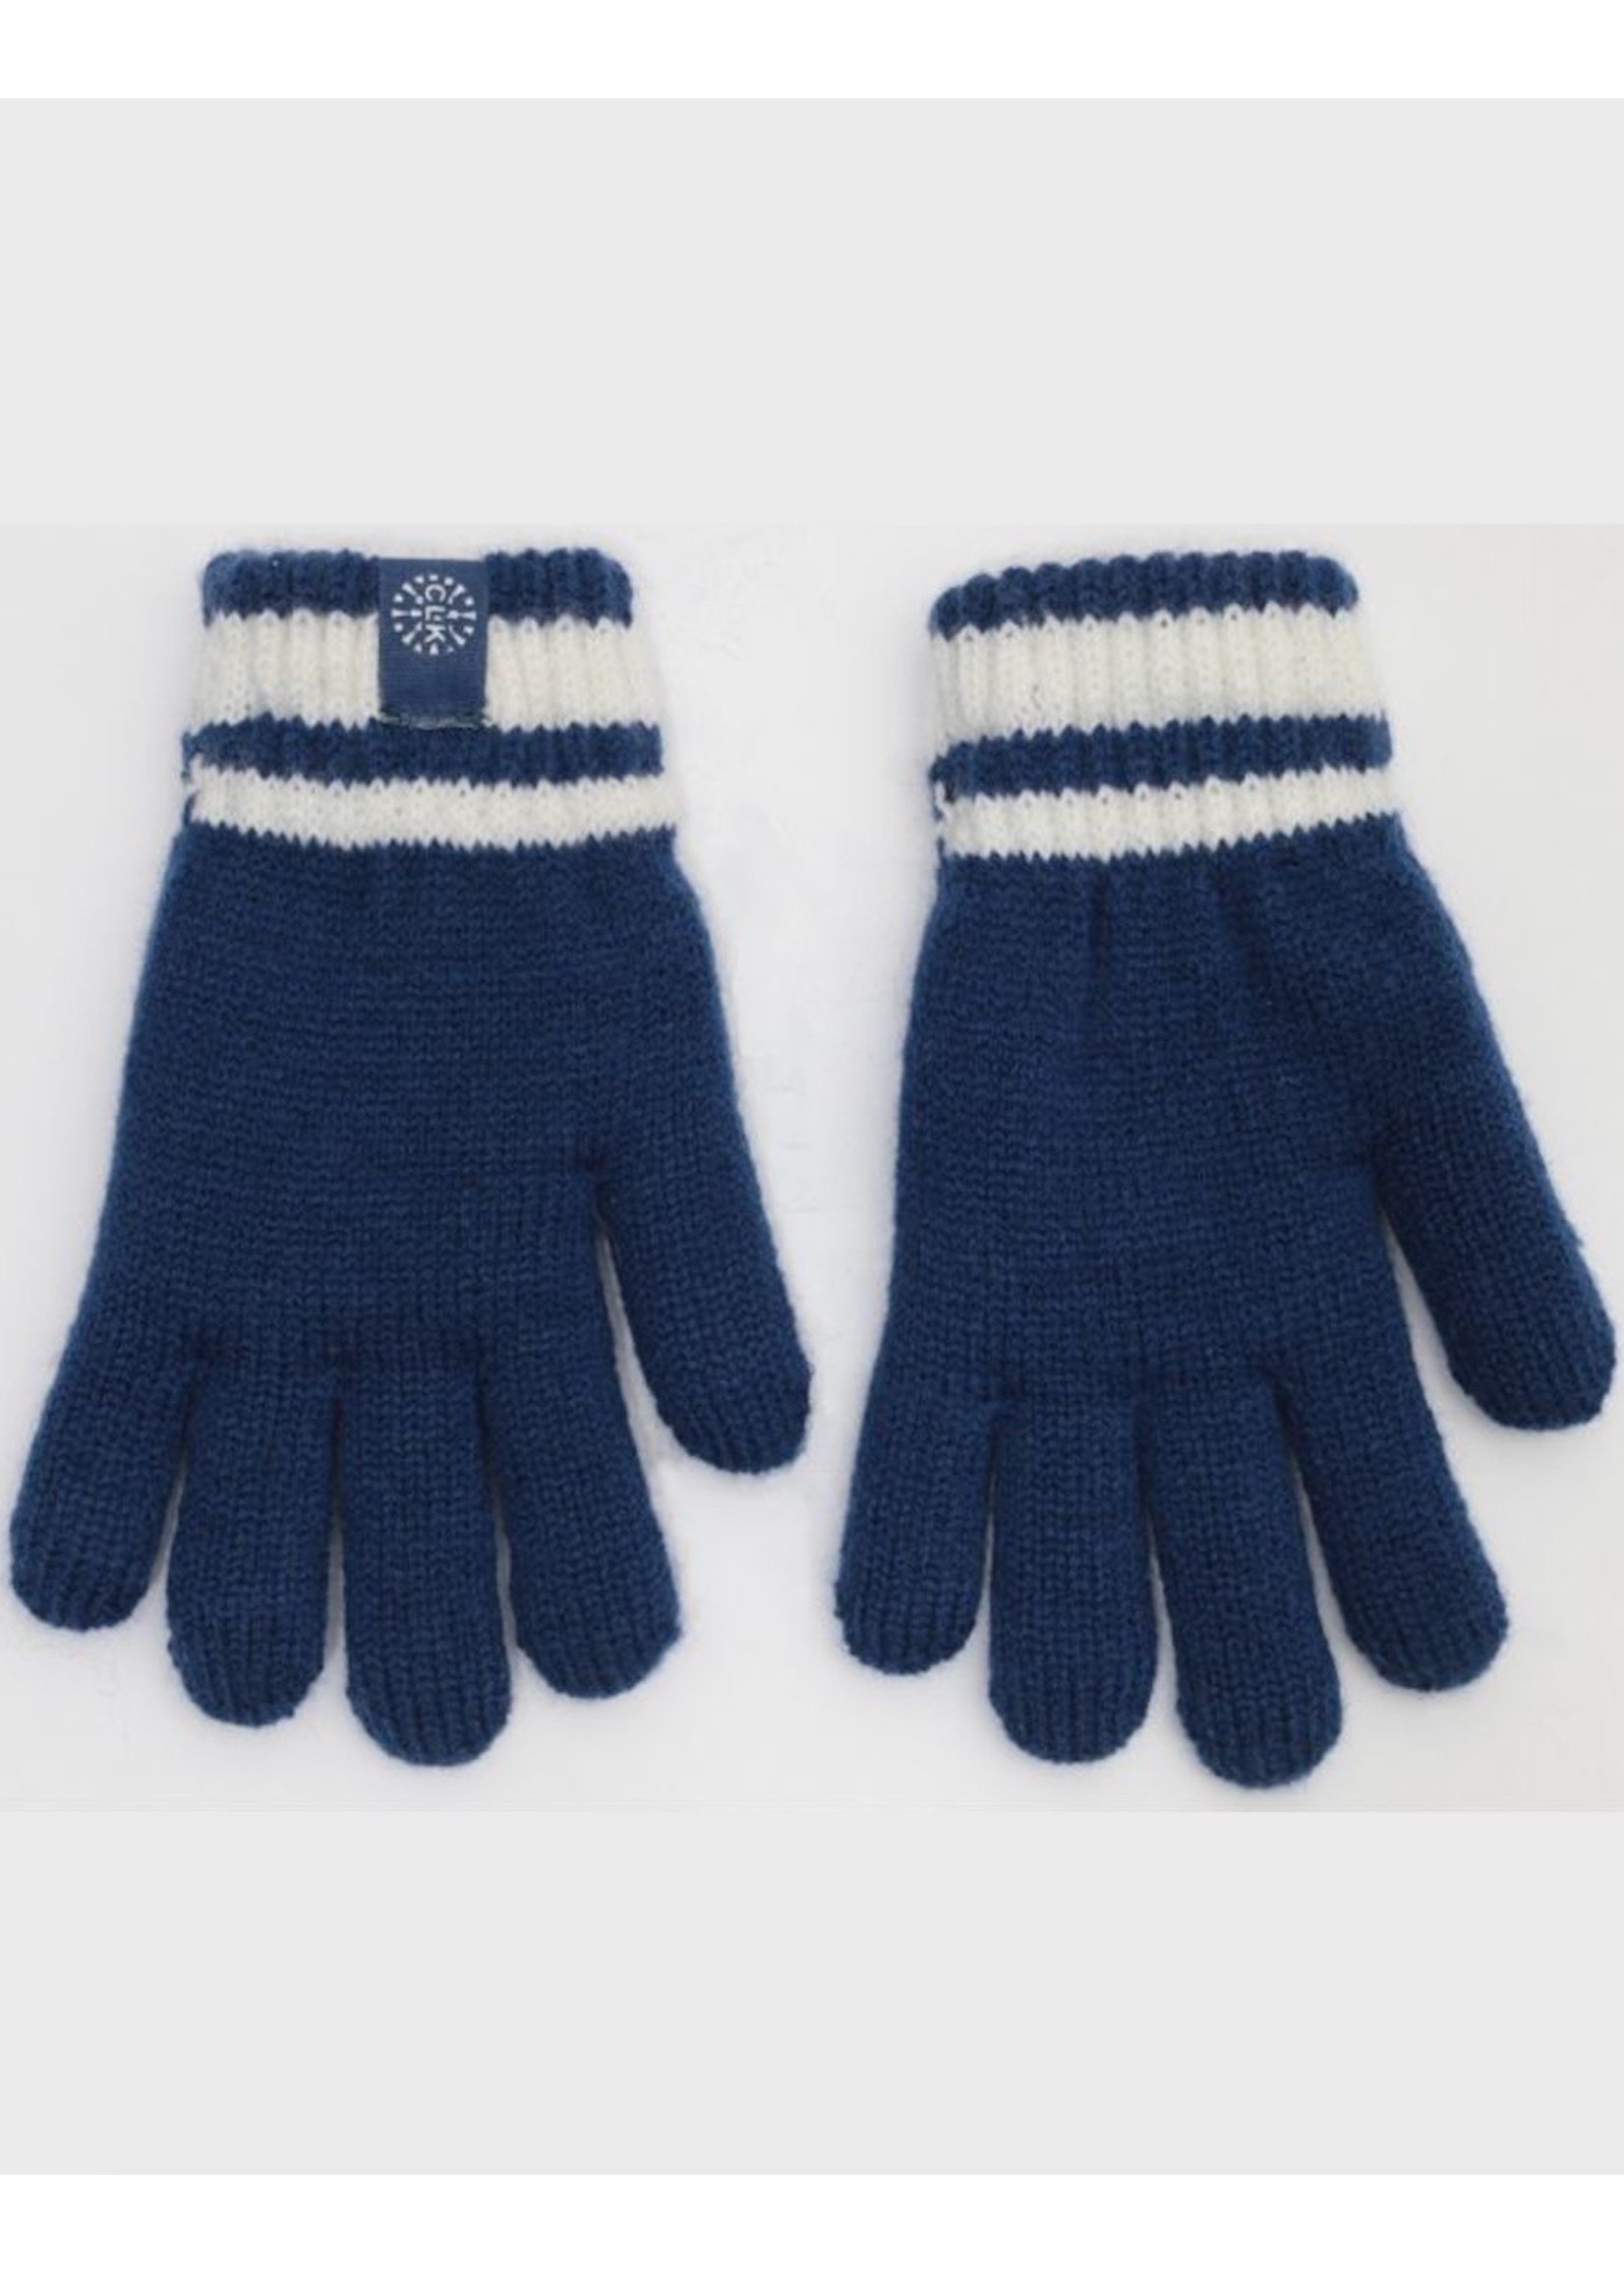 Calikids Calikids, Boys Knit Winter Gloves